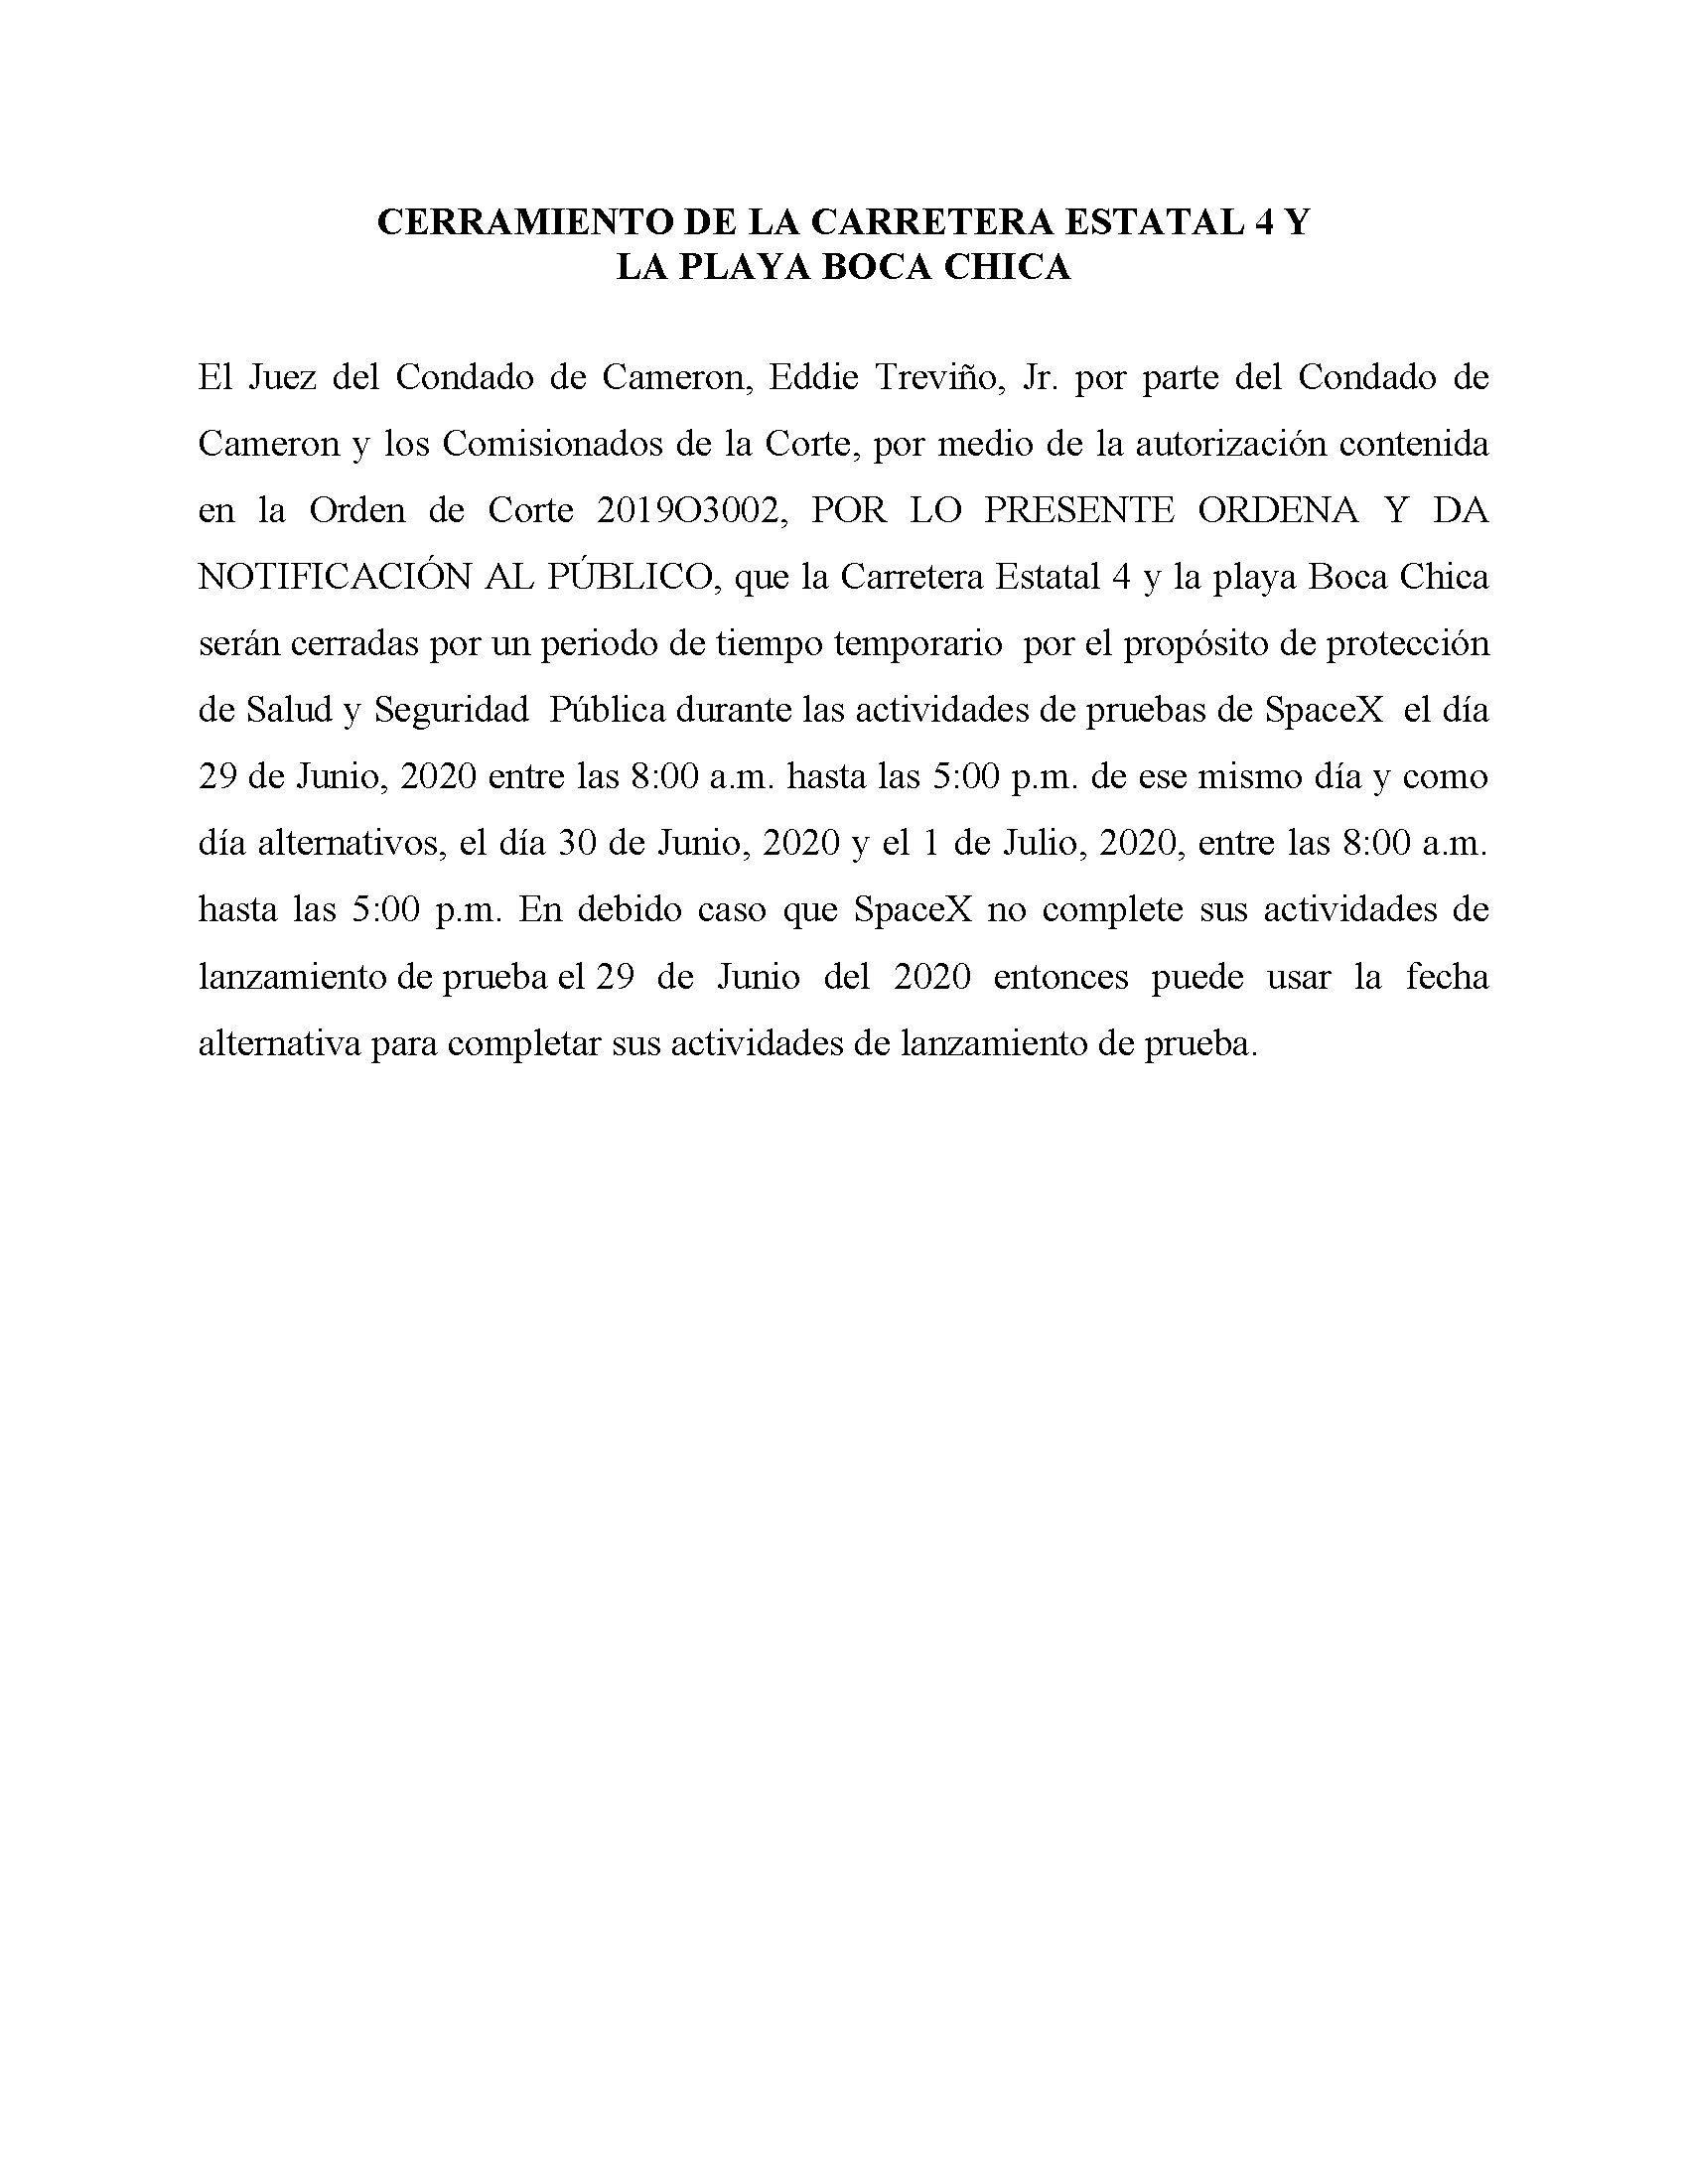 ORDER.CLOSURE OF HIGHWAY 4 Y LA PLAYA BOCA CHICA.SPANISH.06.29.20